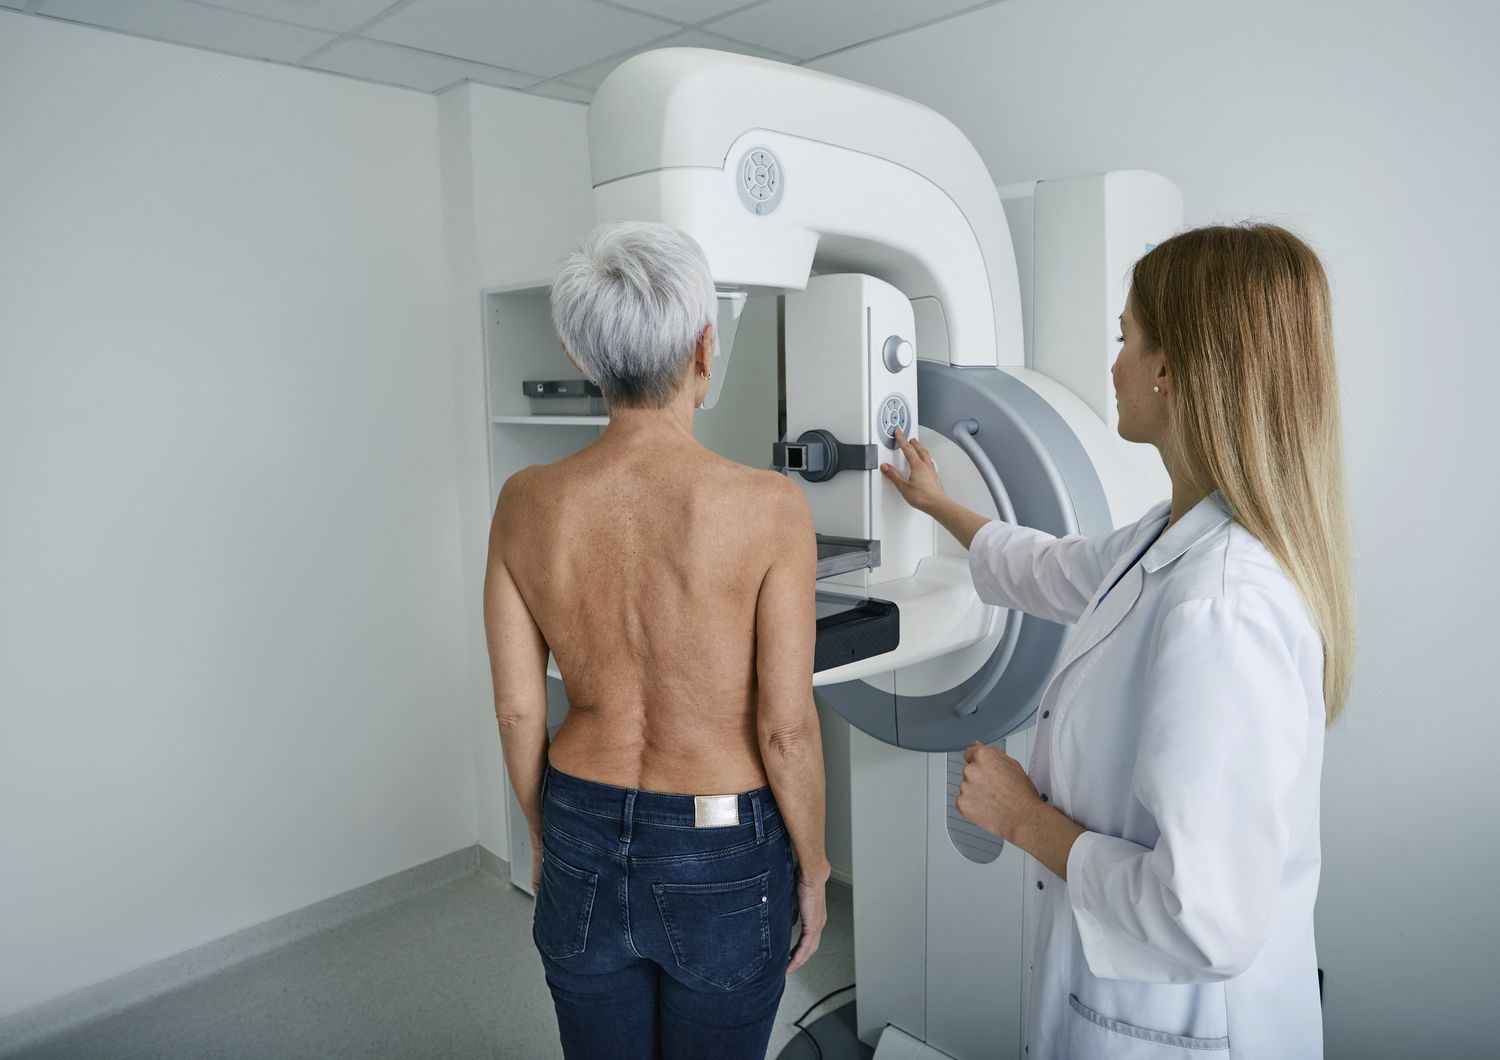 Tumori studio come prevenire metastasi cancro al seno